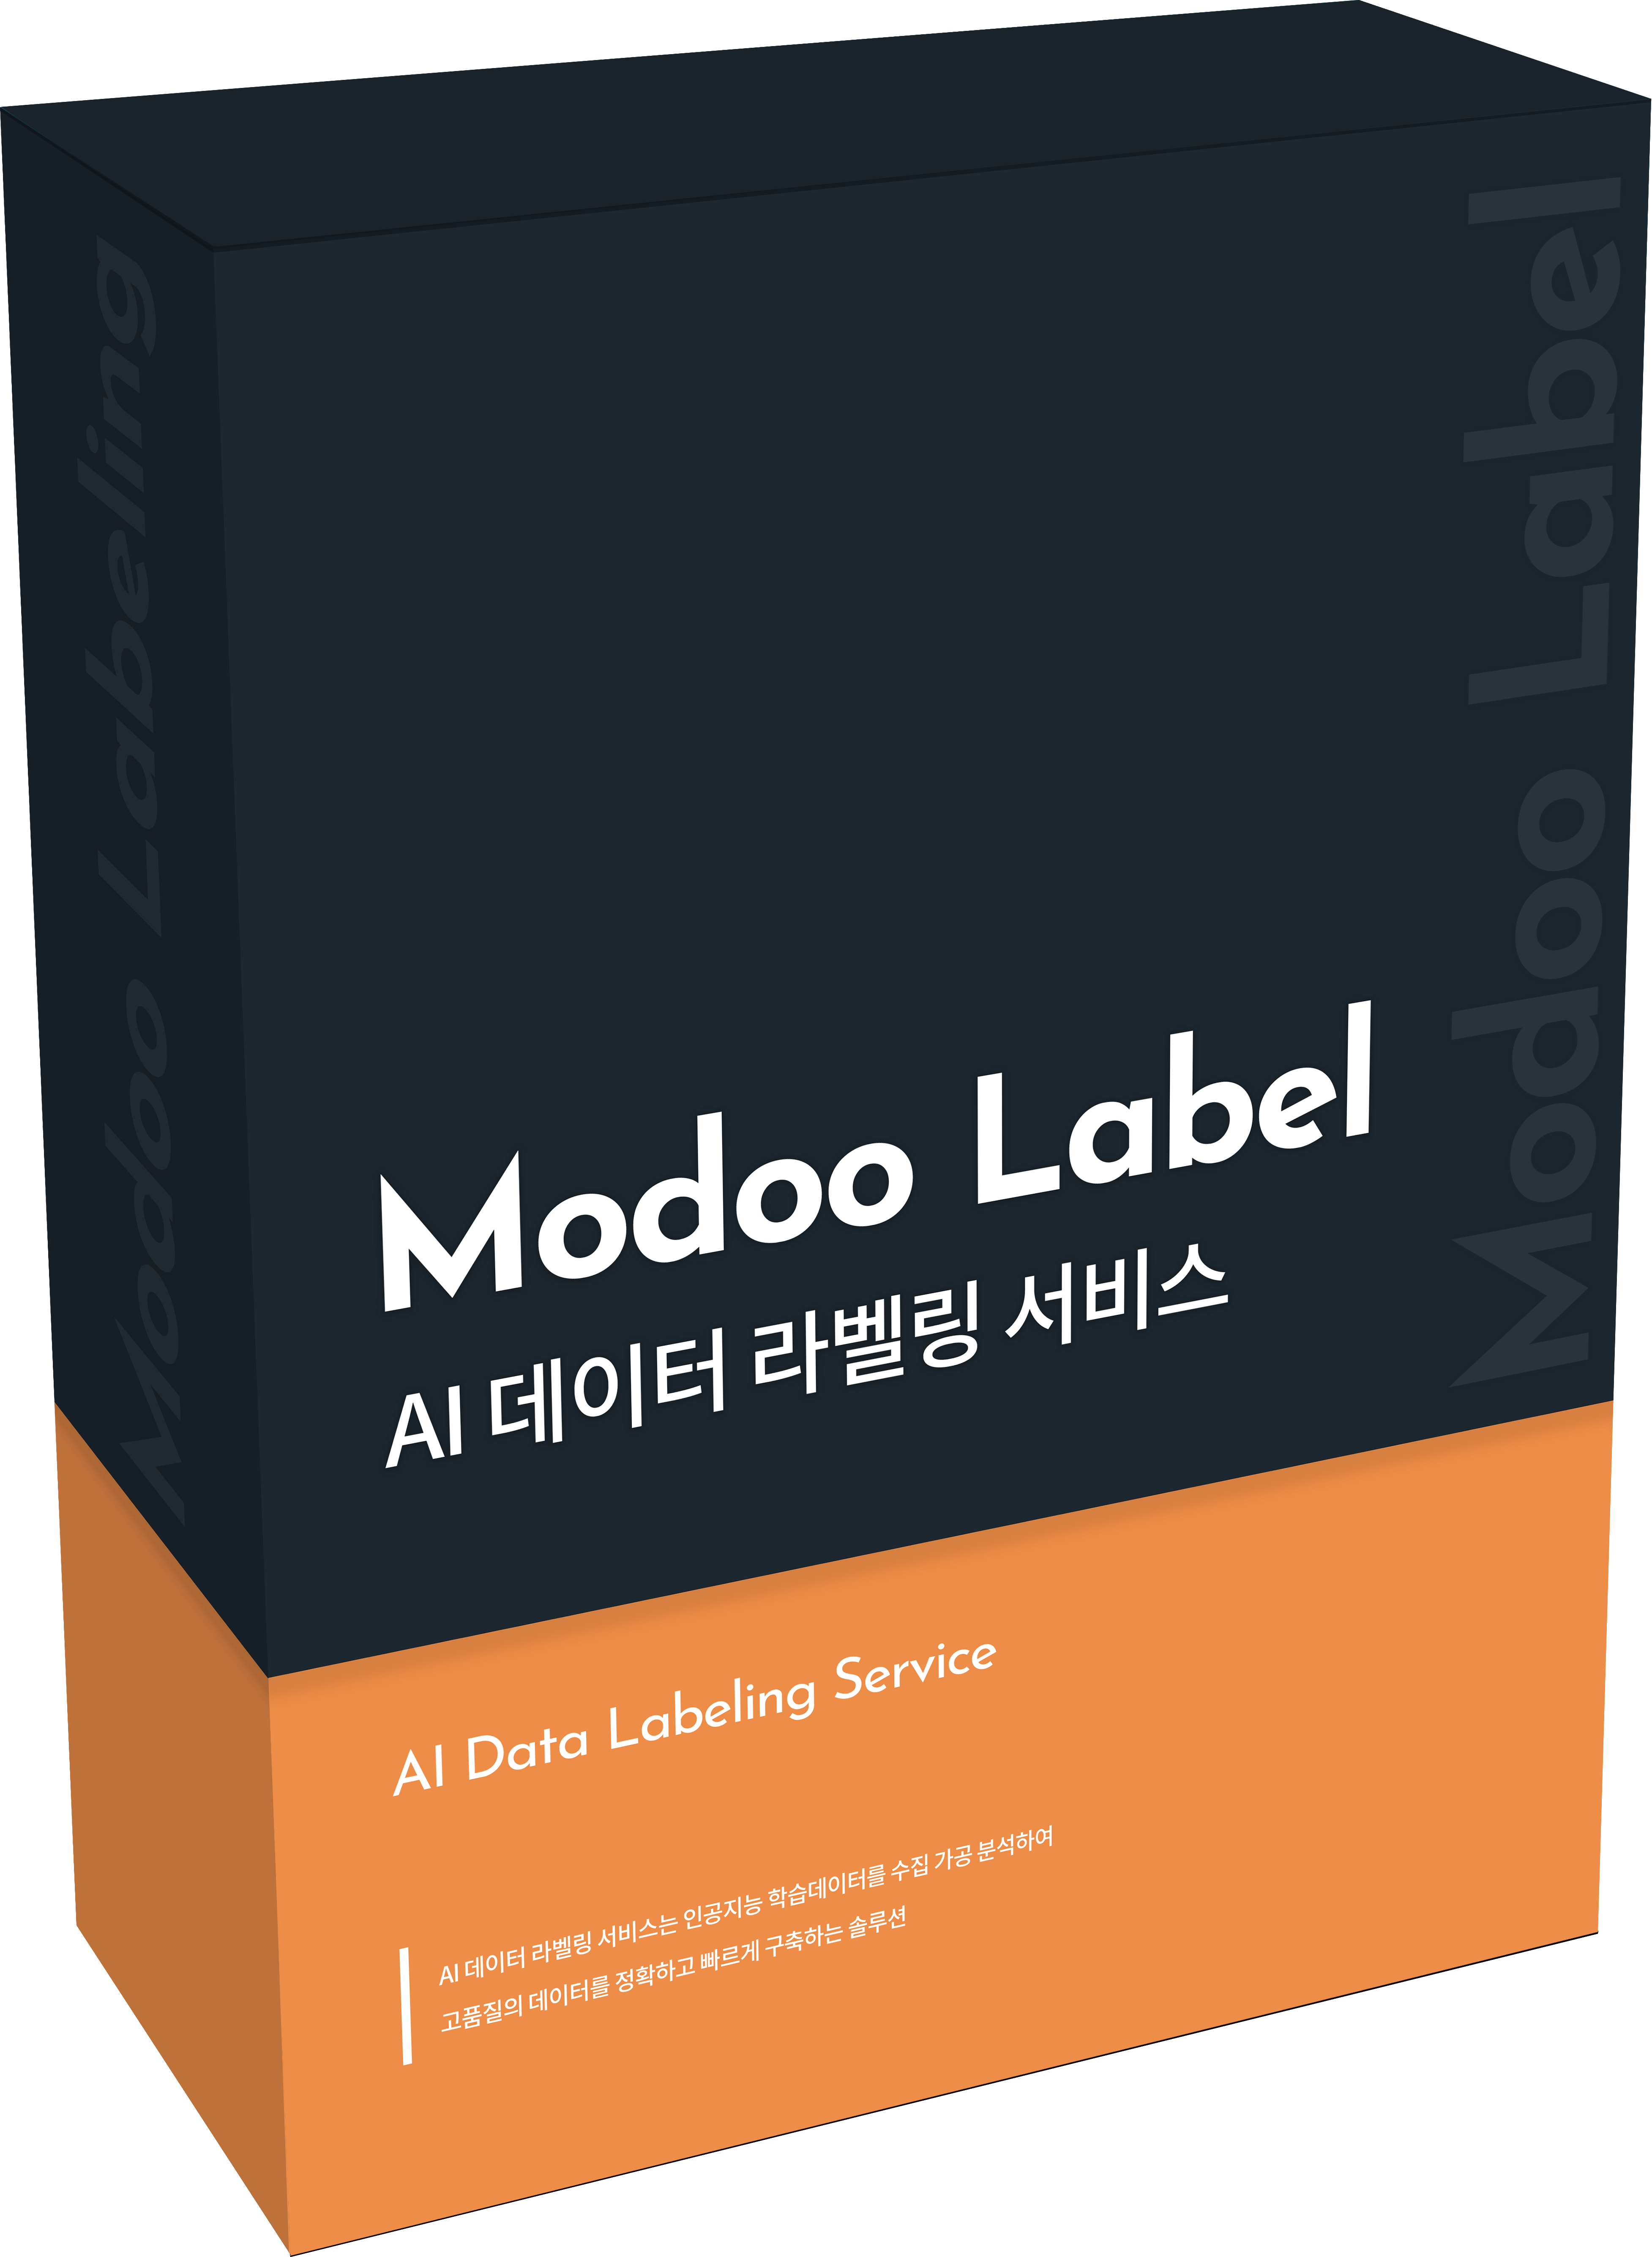 Modoo Label